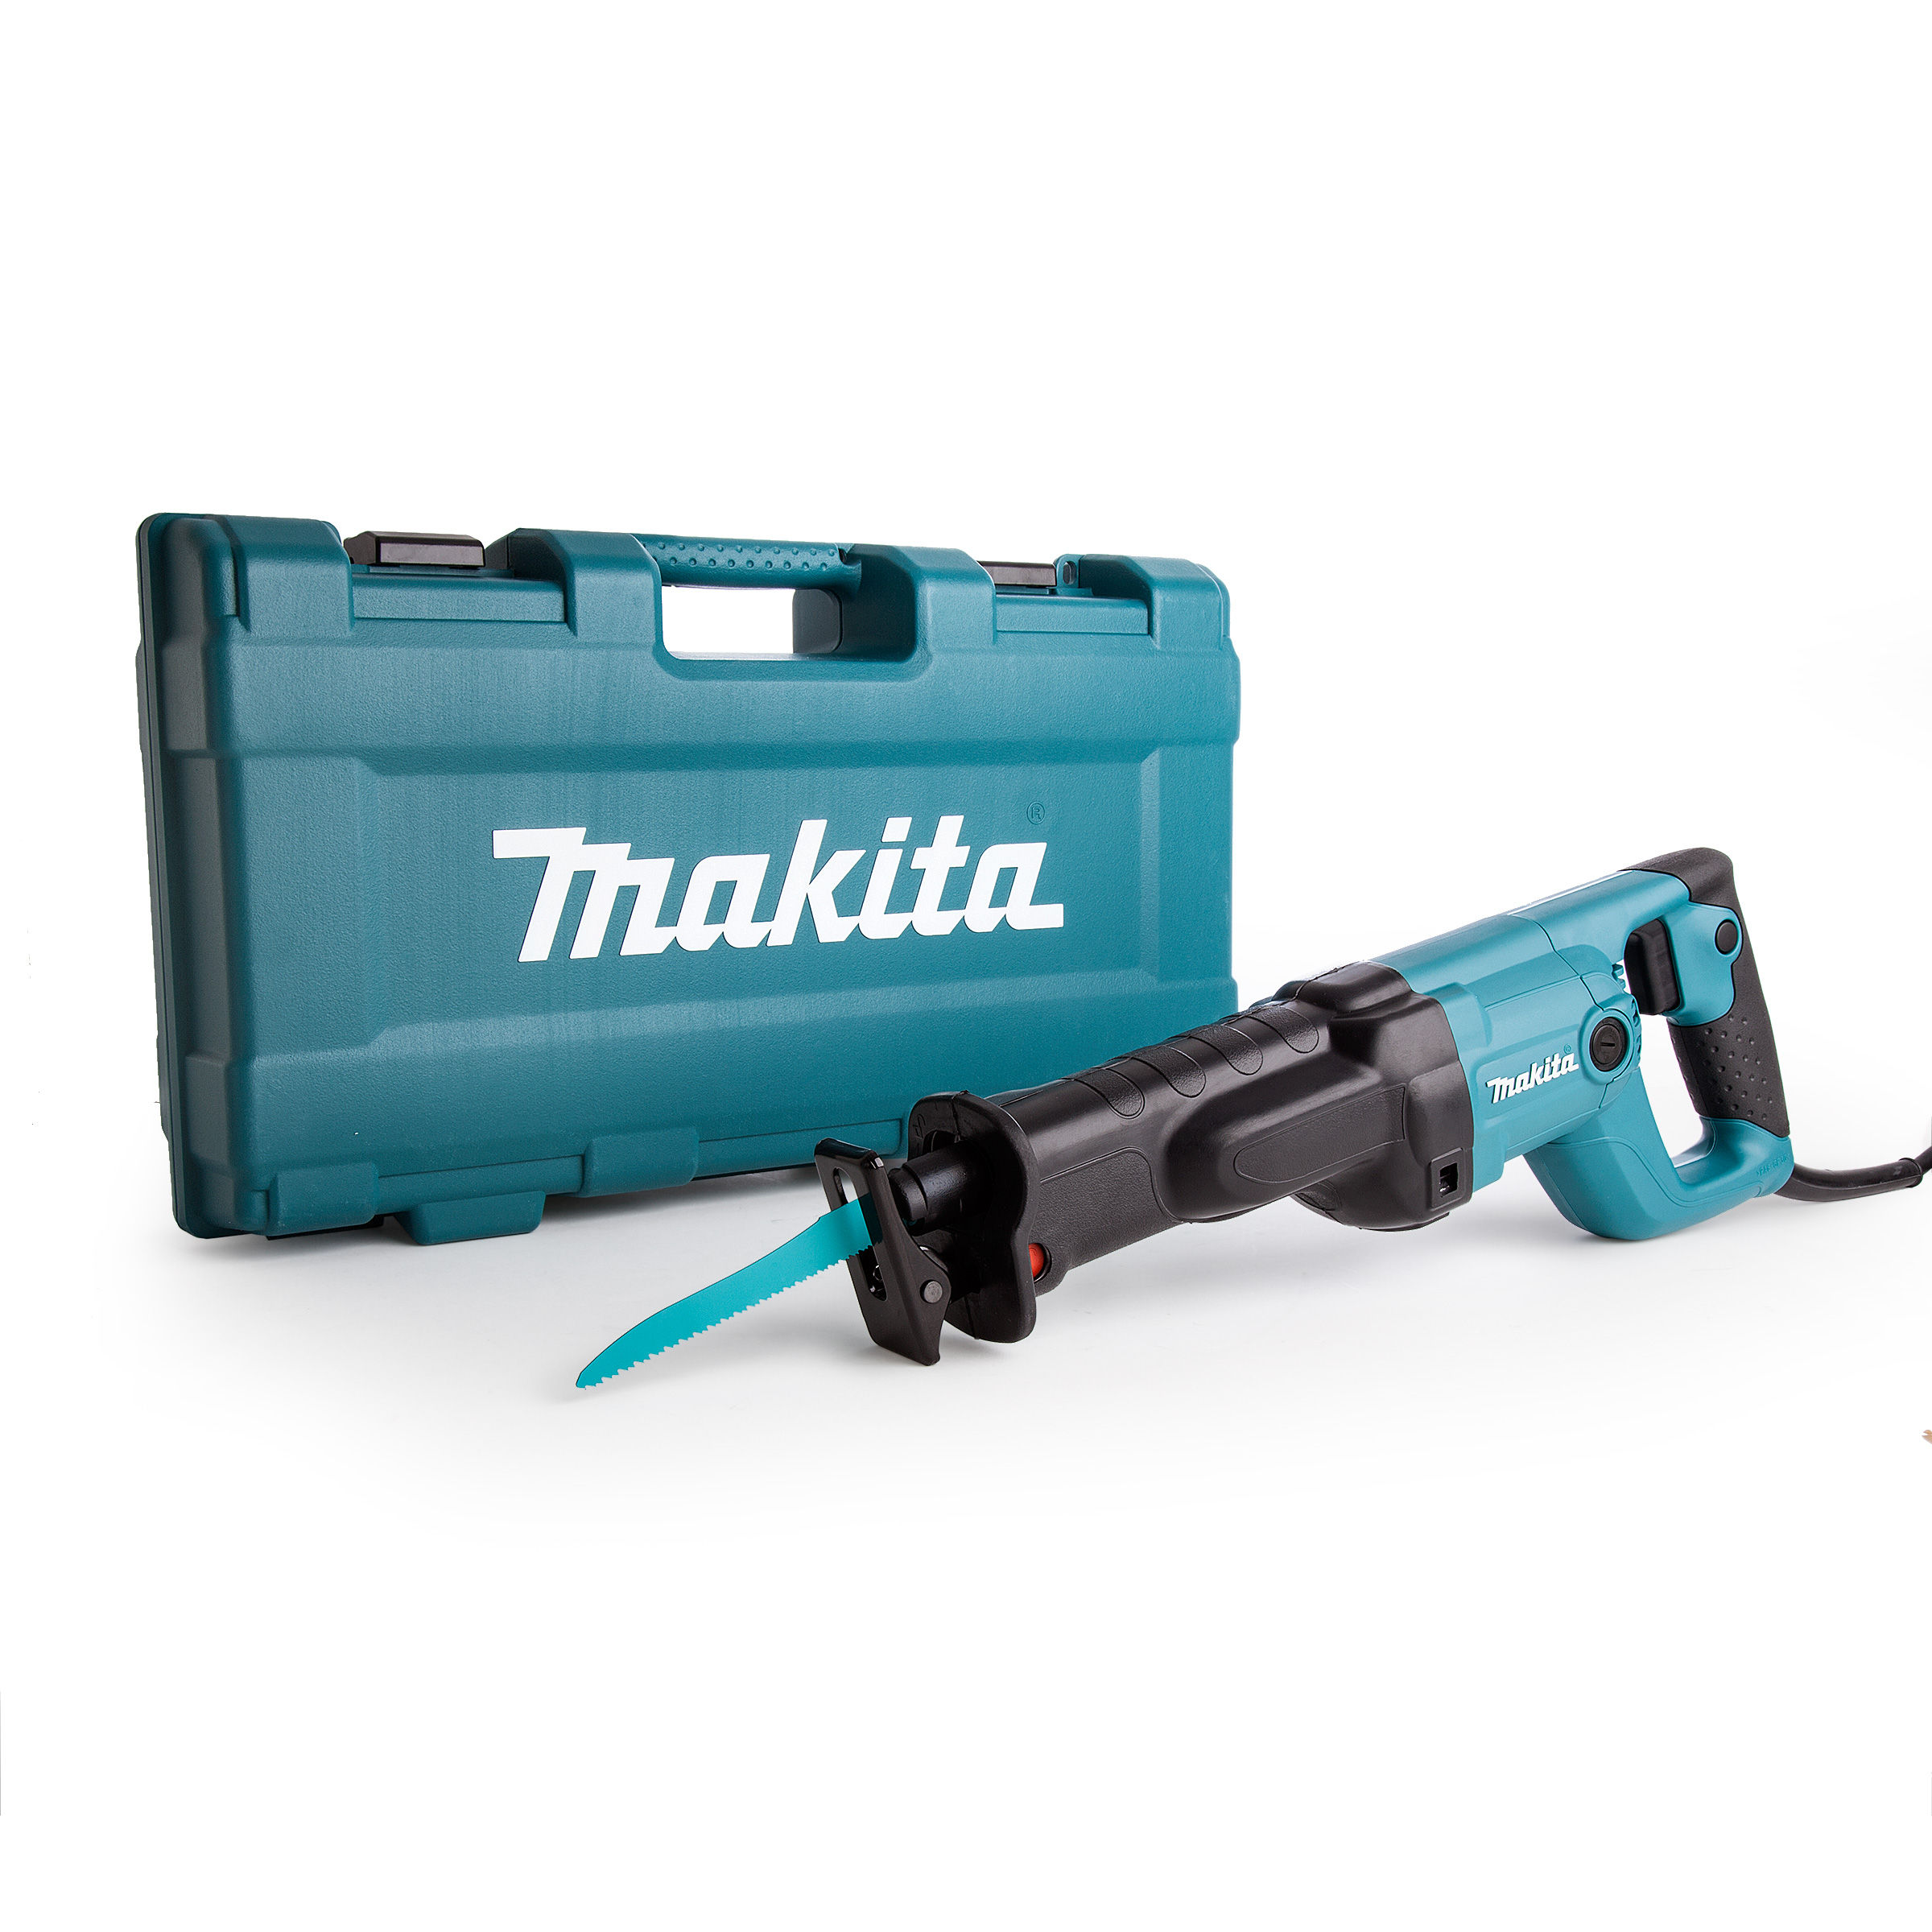 Toolstop Makita JR3050T Reciprocating Saw 110V